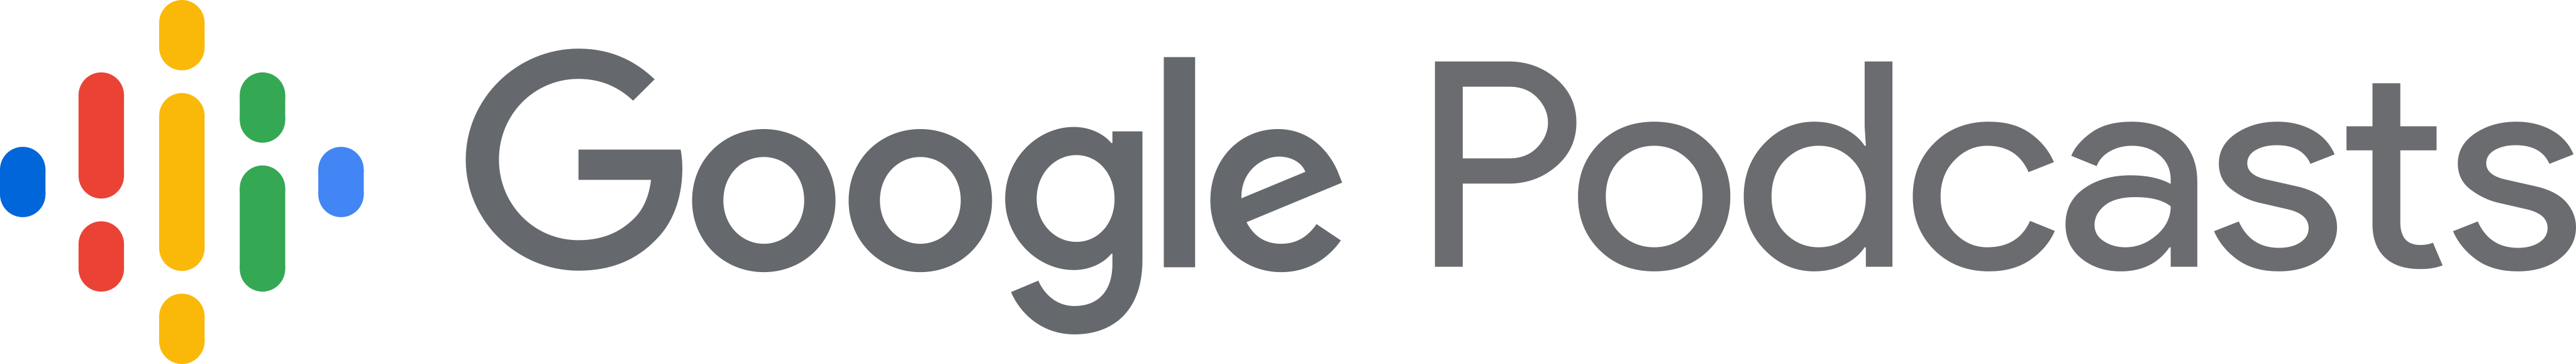 google-podcasts-logo-PNG